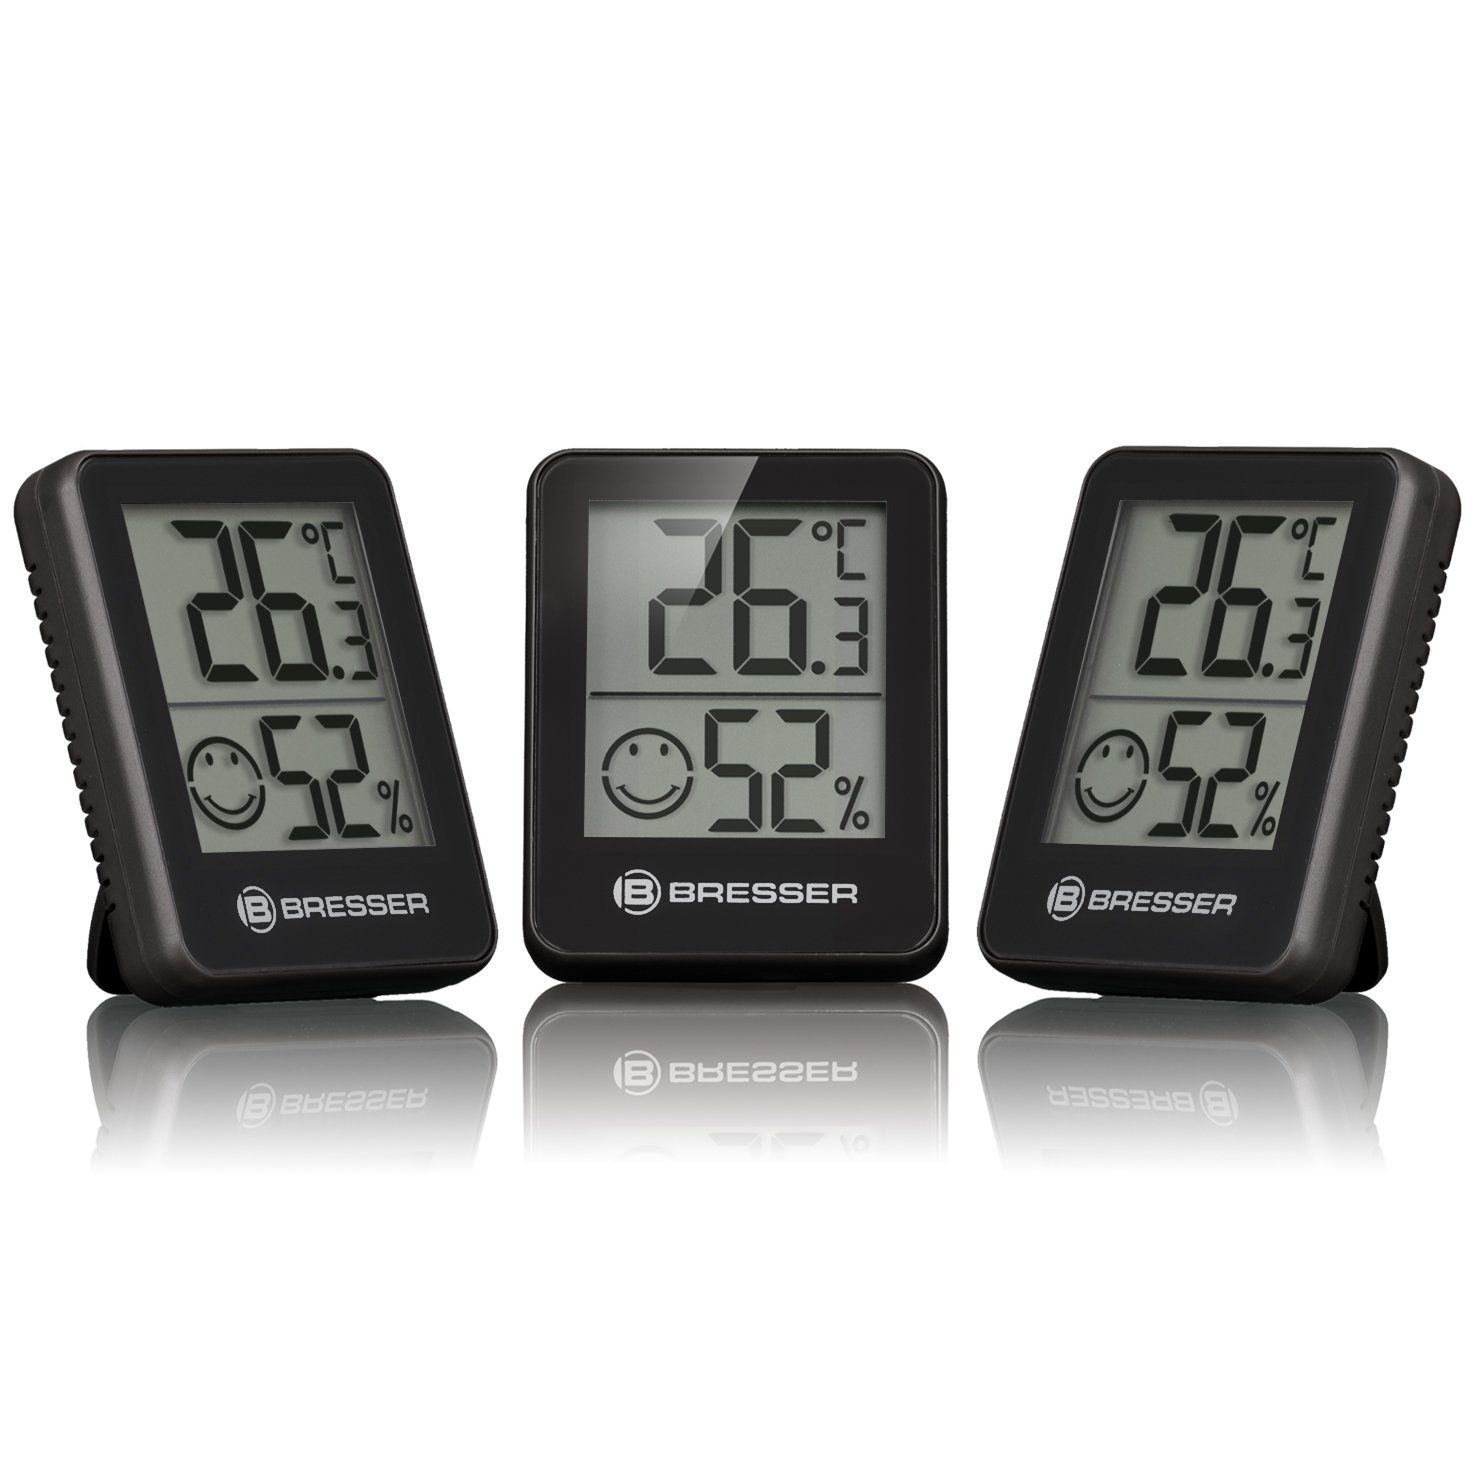 Temeo Hygro 3er Set Temperaturmessgerät Hygrometer schwarz Thermometer Indikator BRESSER /